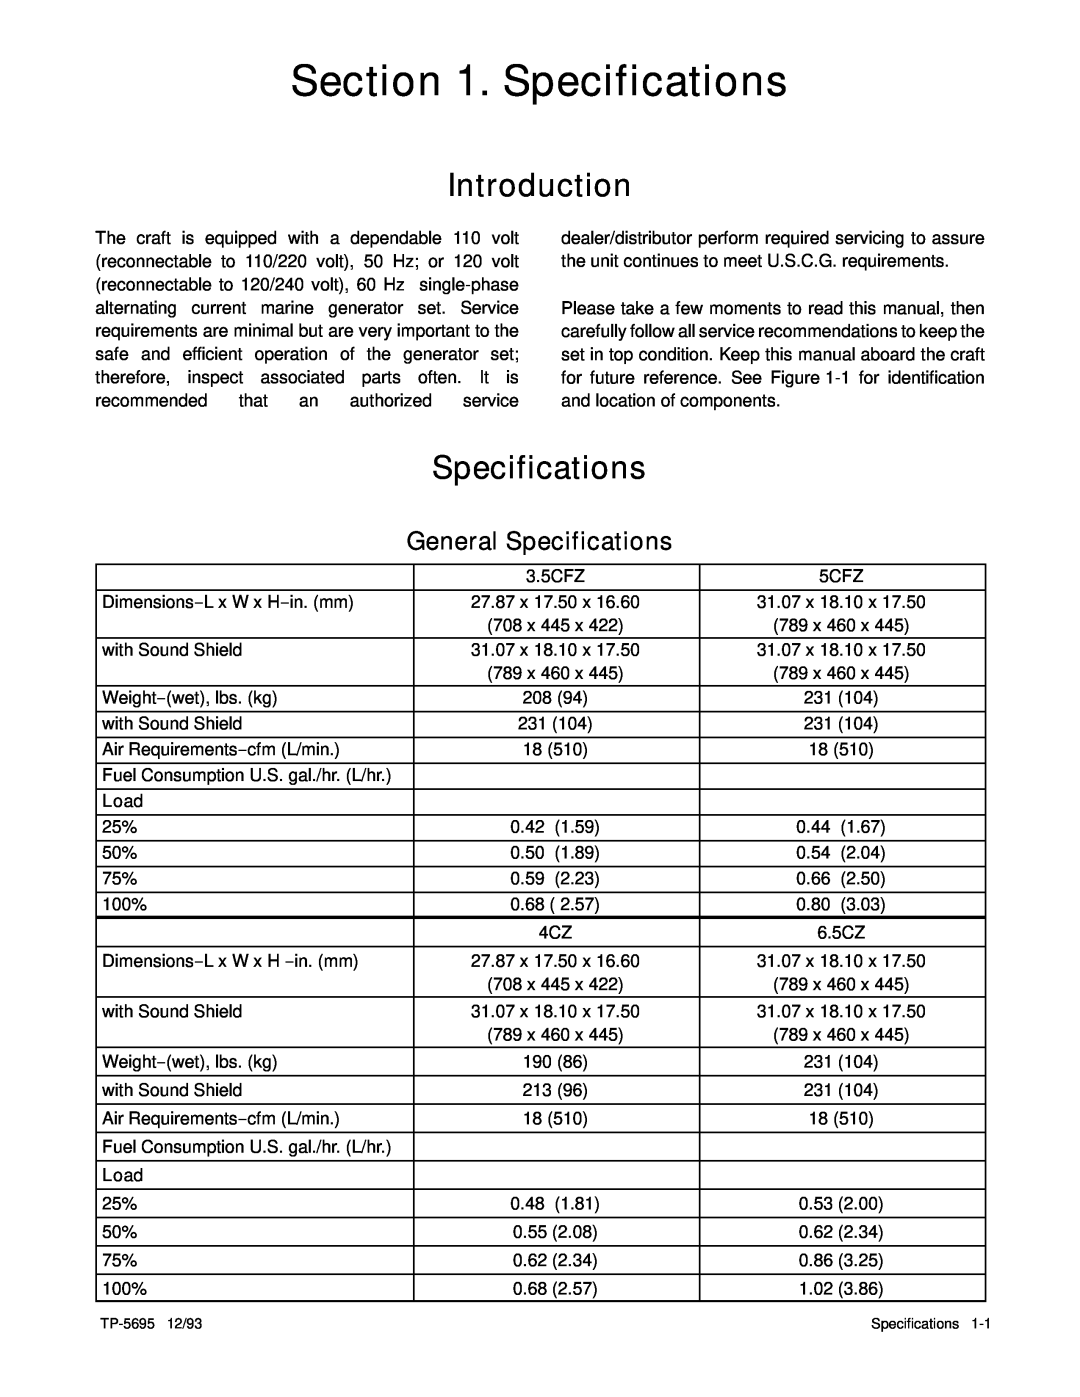 Kohler 3.5CFZ, 4CZ, 5CFZ, 6.5CZ installation manual Introduction, General Specifications, Load 